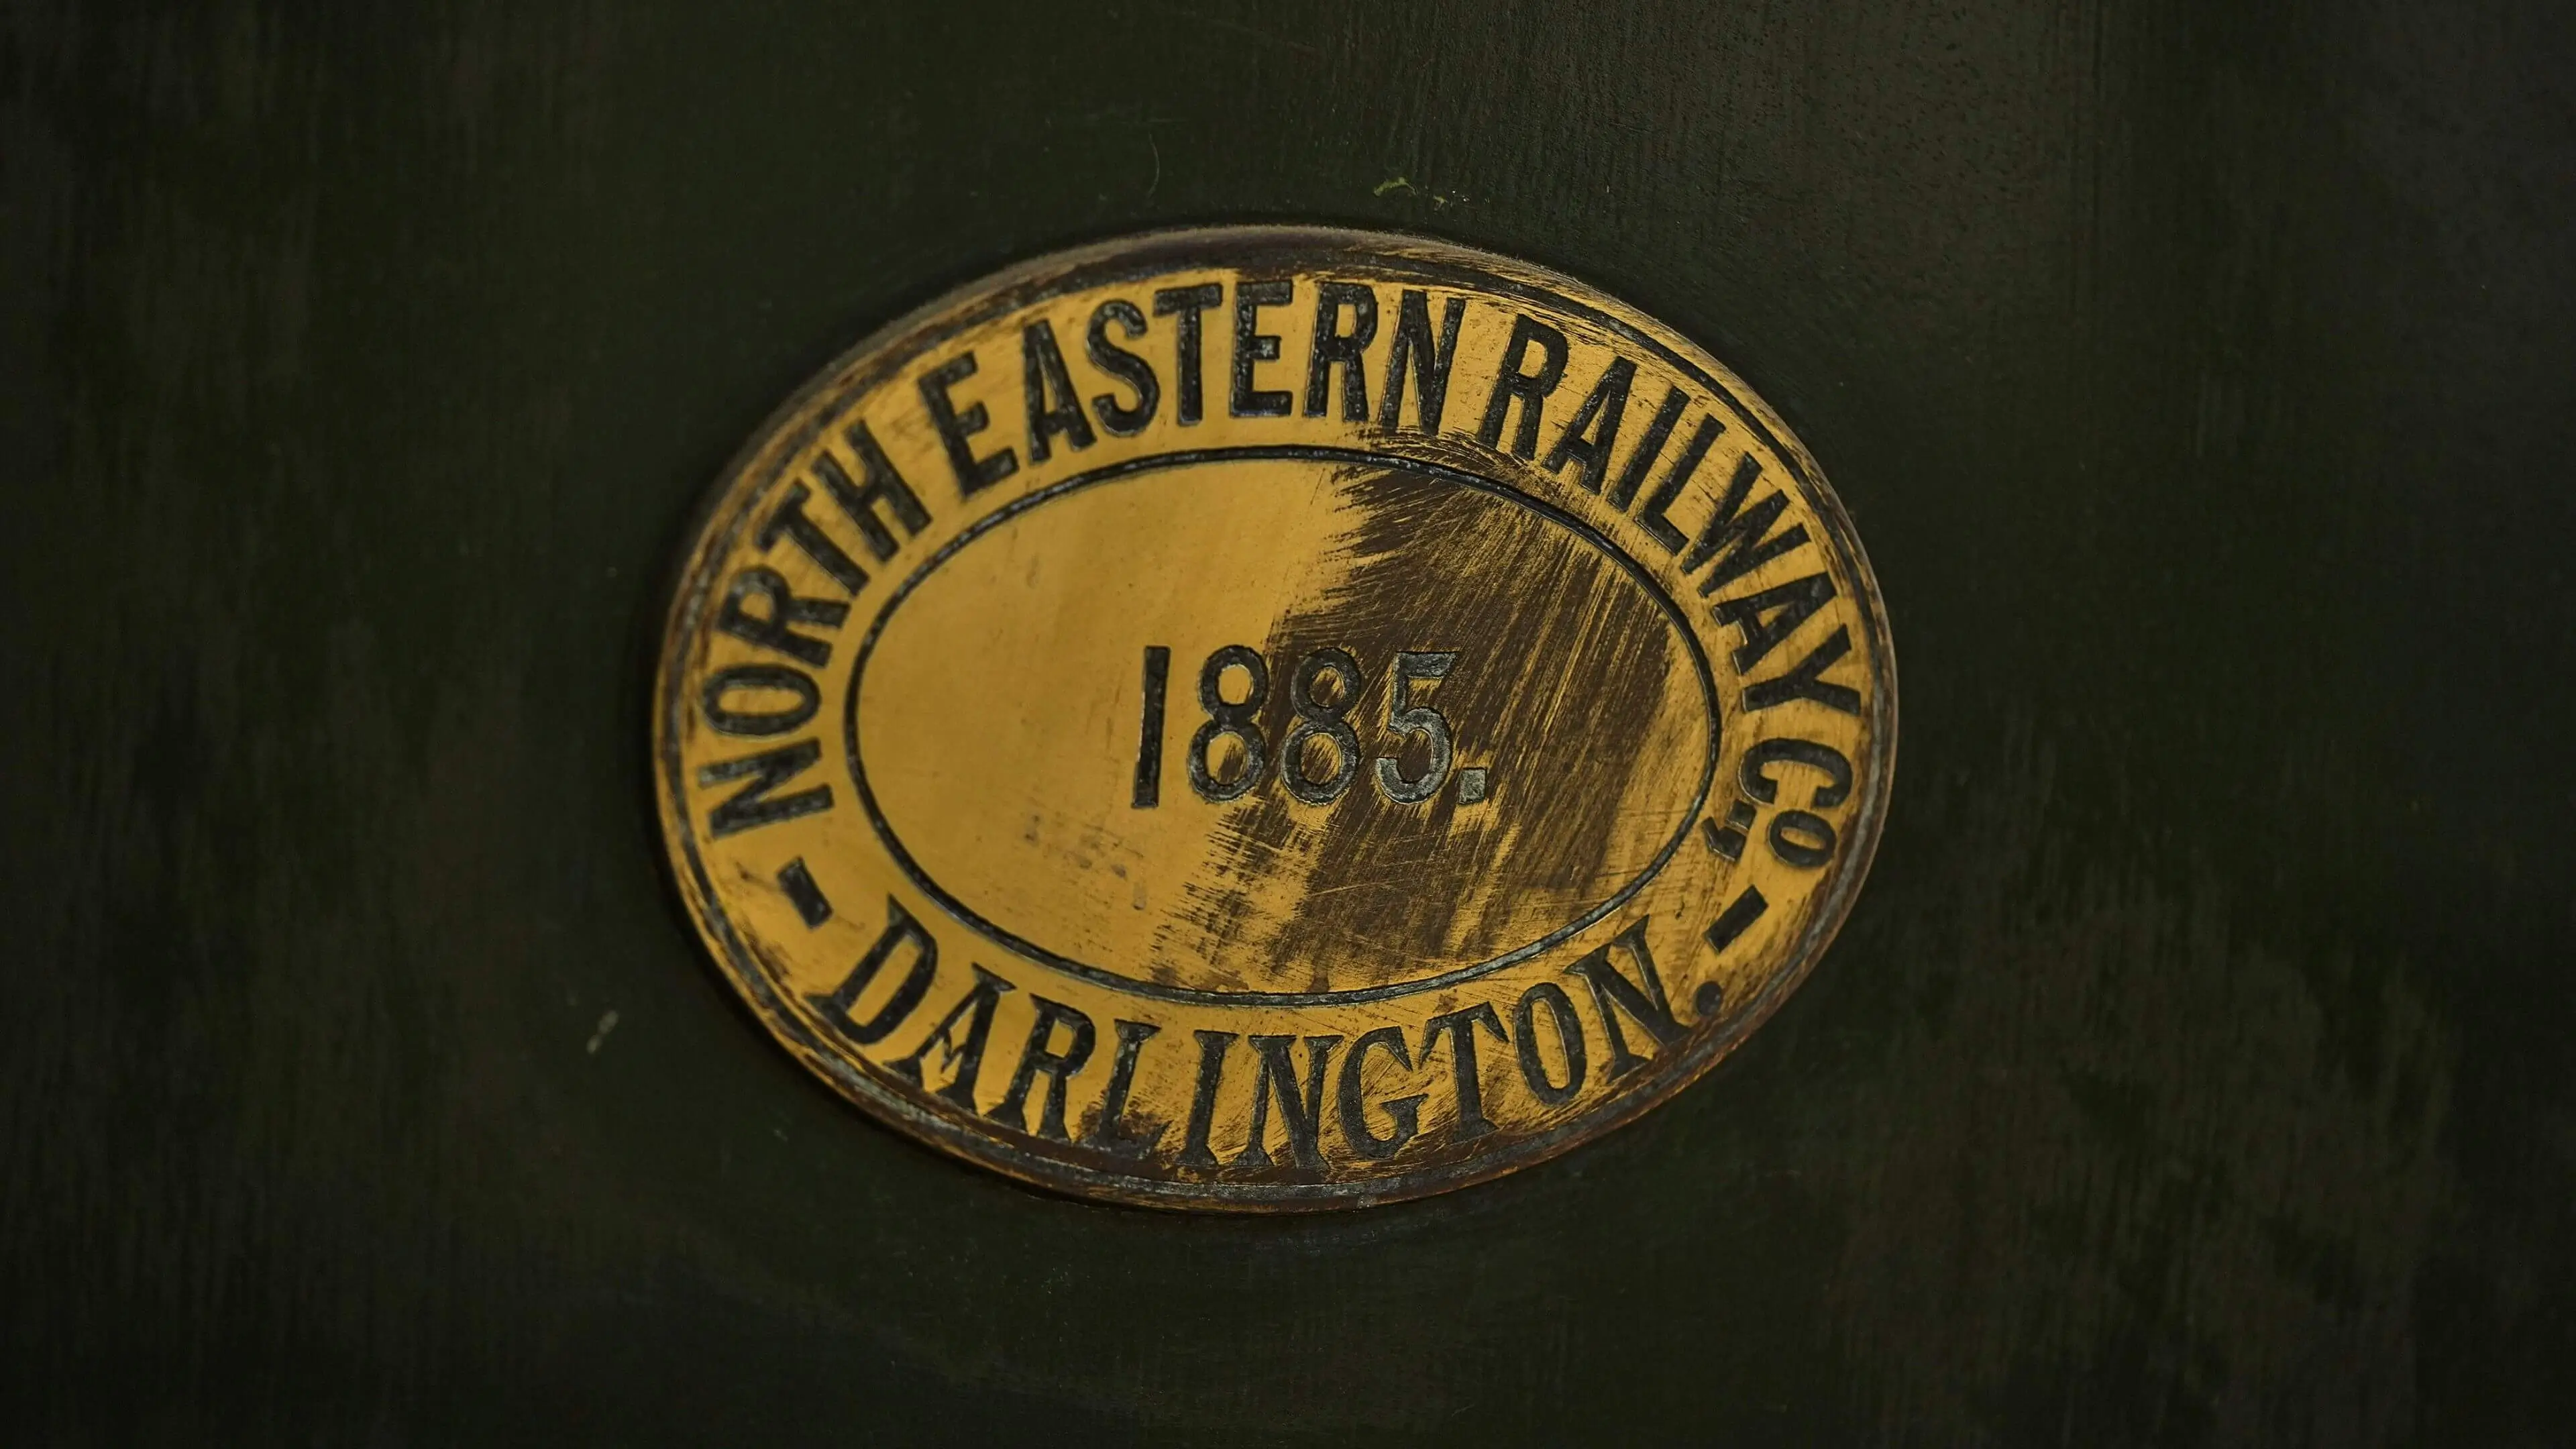 North Eastern Railway badge on a locomotive